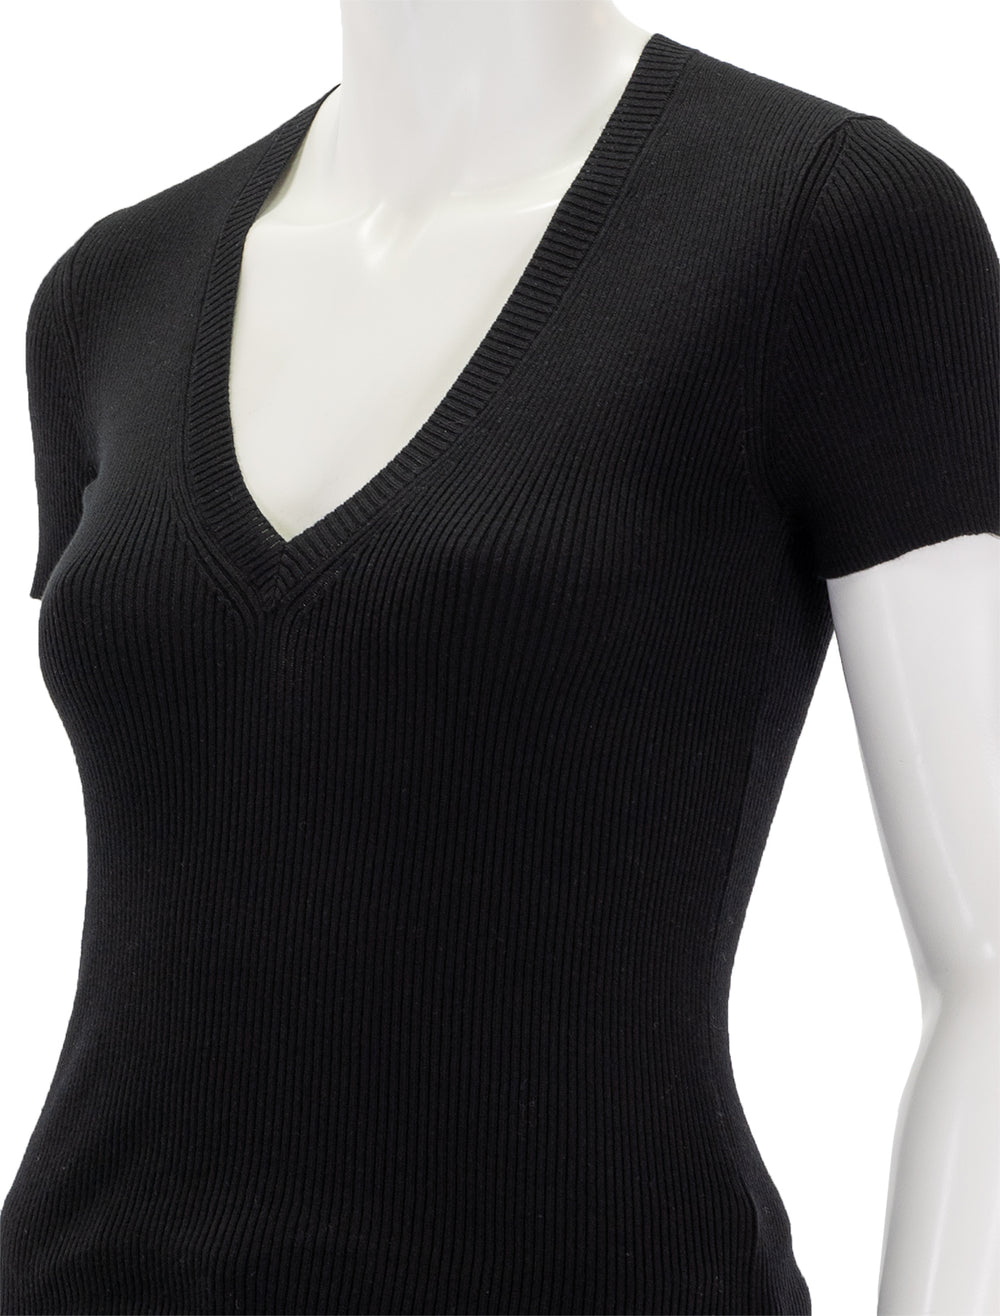 Close-up view of Nili Lotan's italia sweater in black.